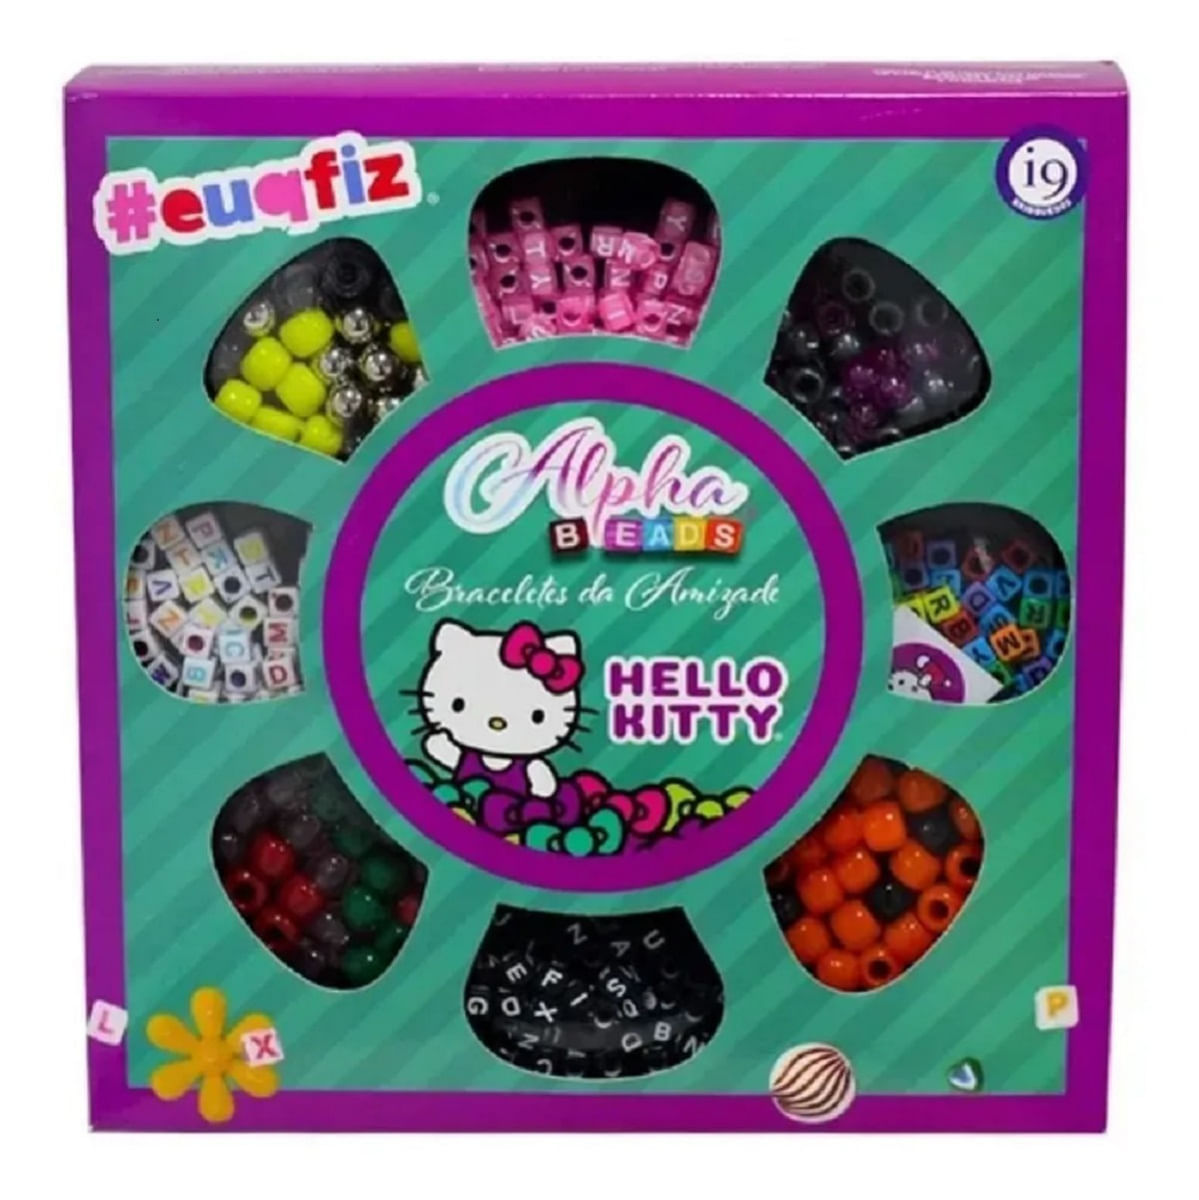 Euqfiz Braceletes Da Amizade Hello Kitty I9 Bri0138